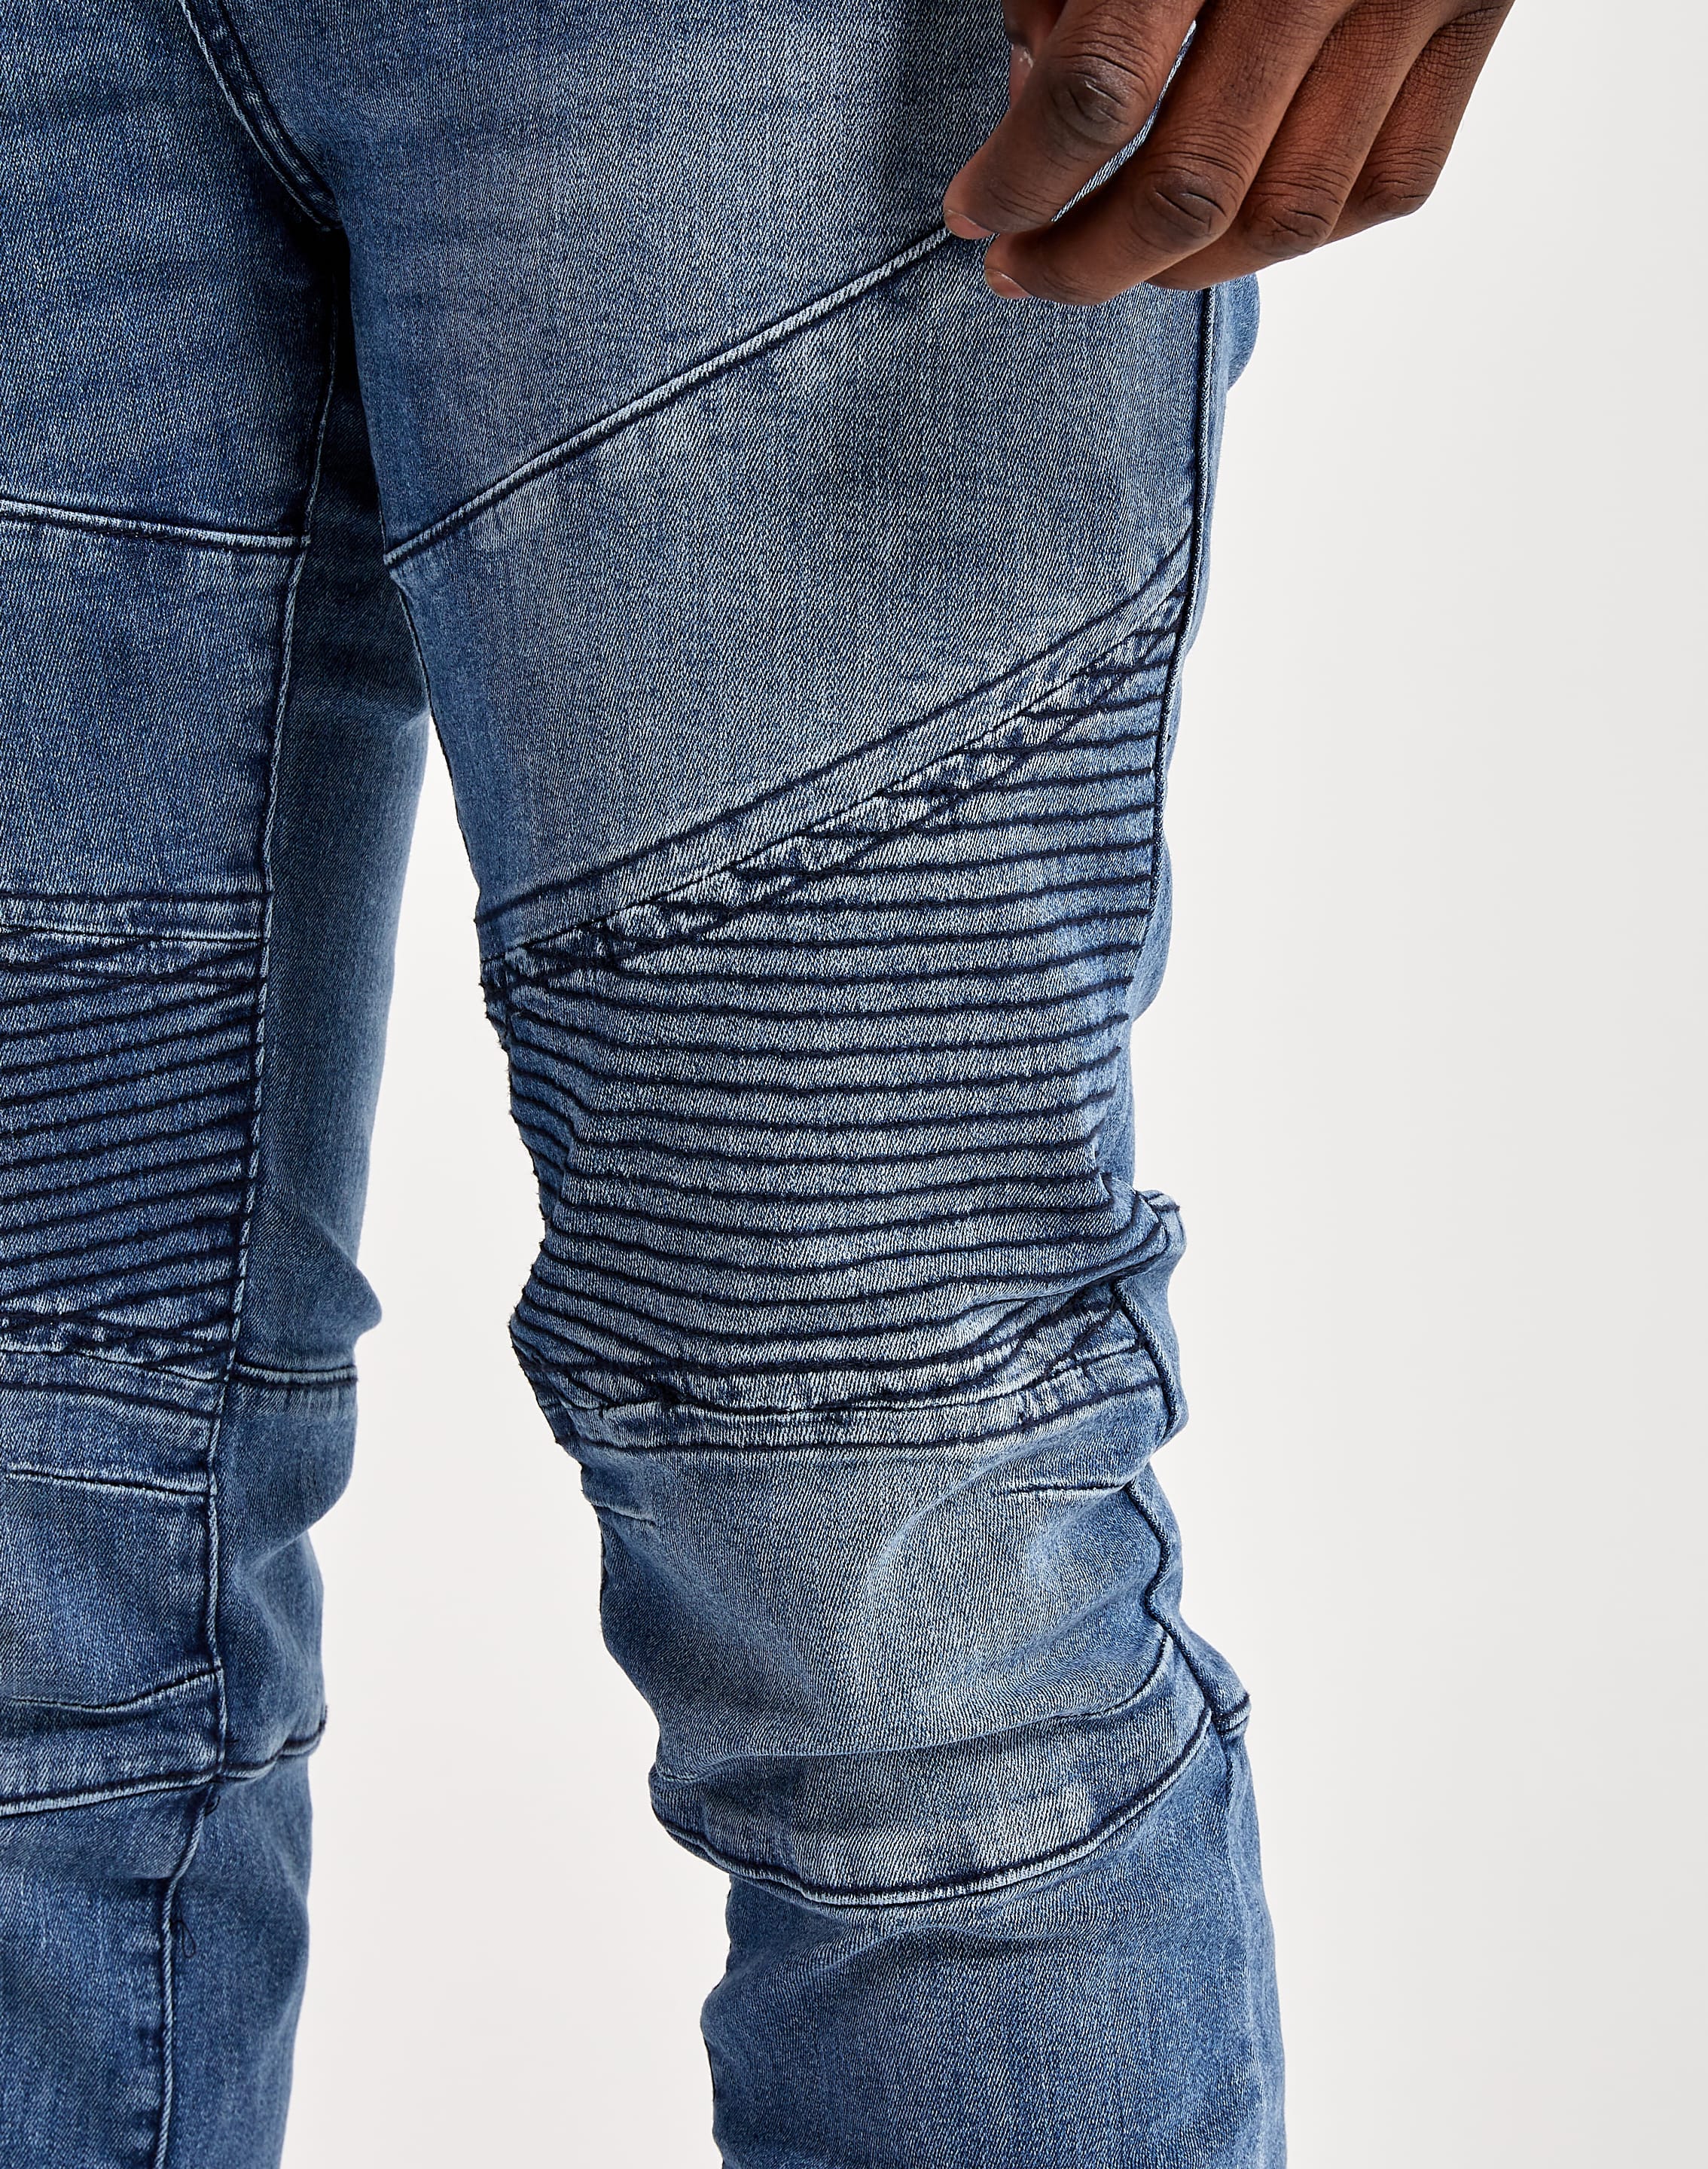 Pantalón impermeable rocco — Totmoto